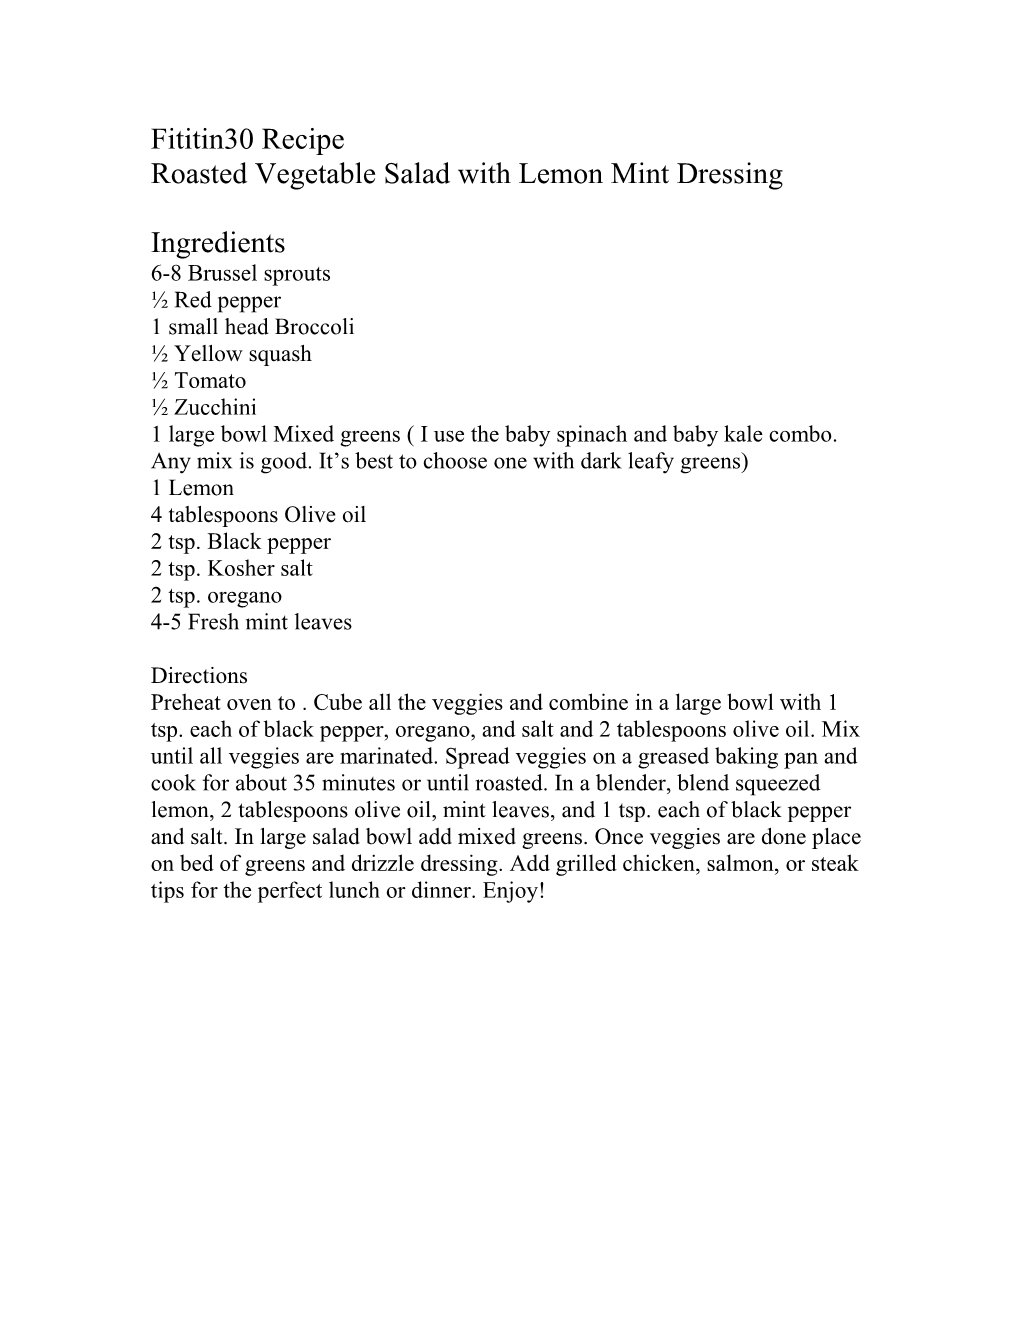 Roasted Vegetable Salad with Lemon Mint Dressing